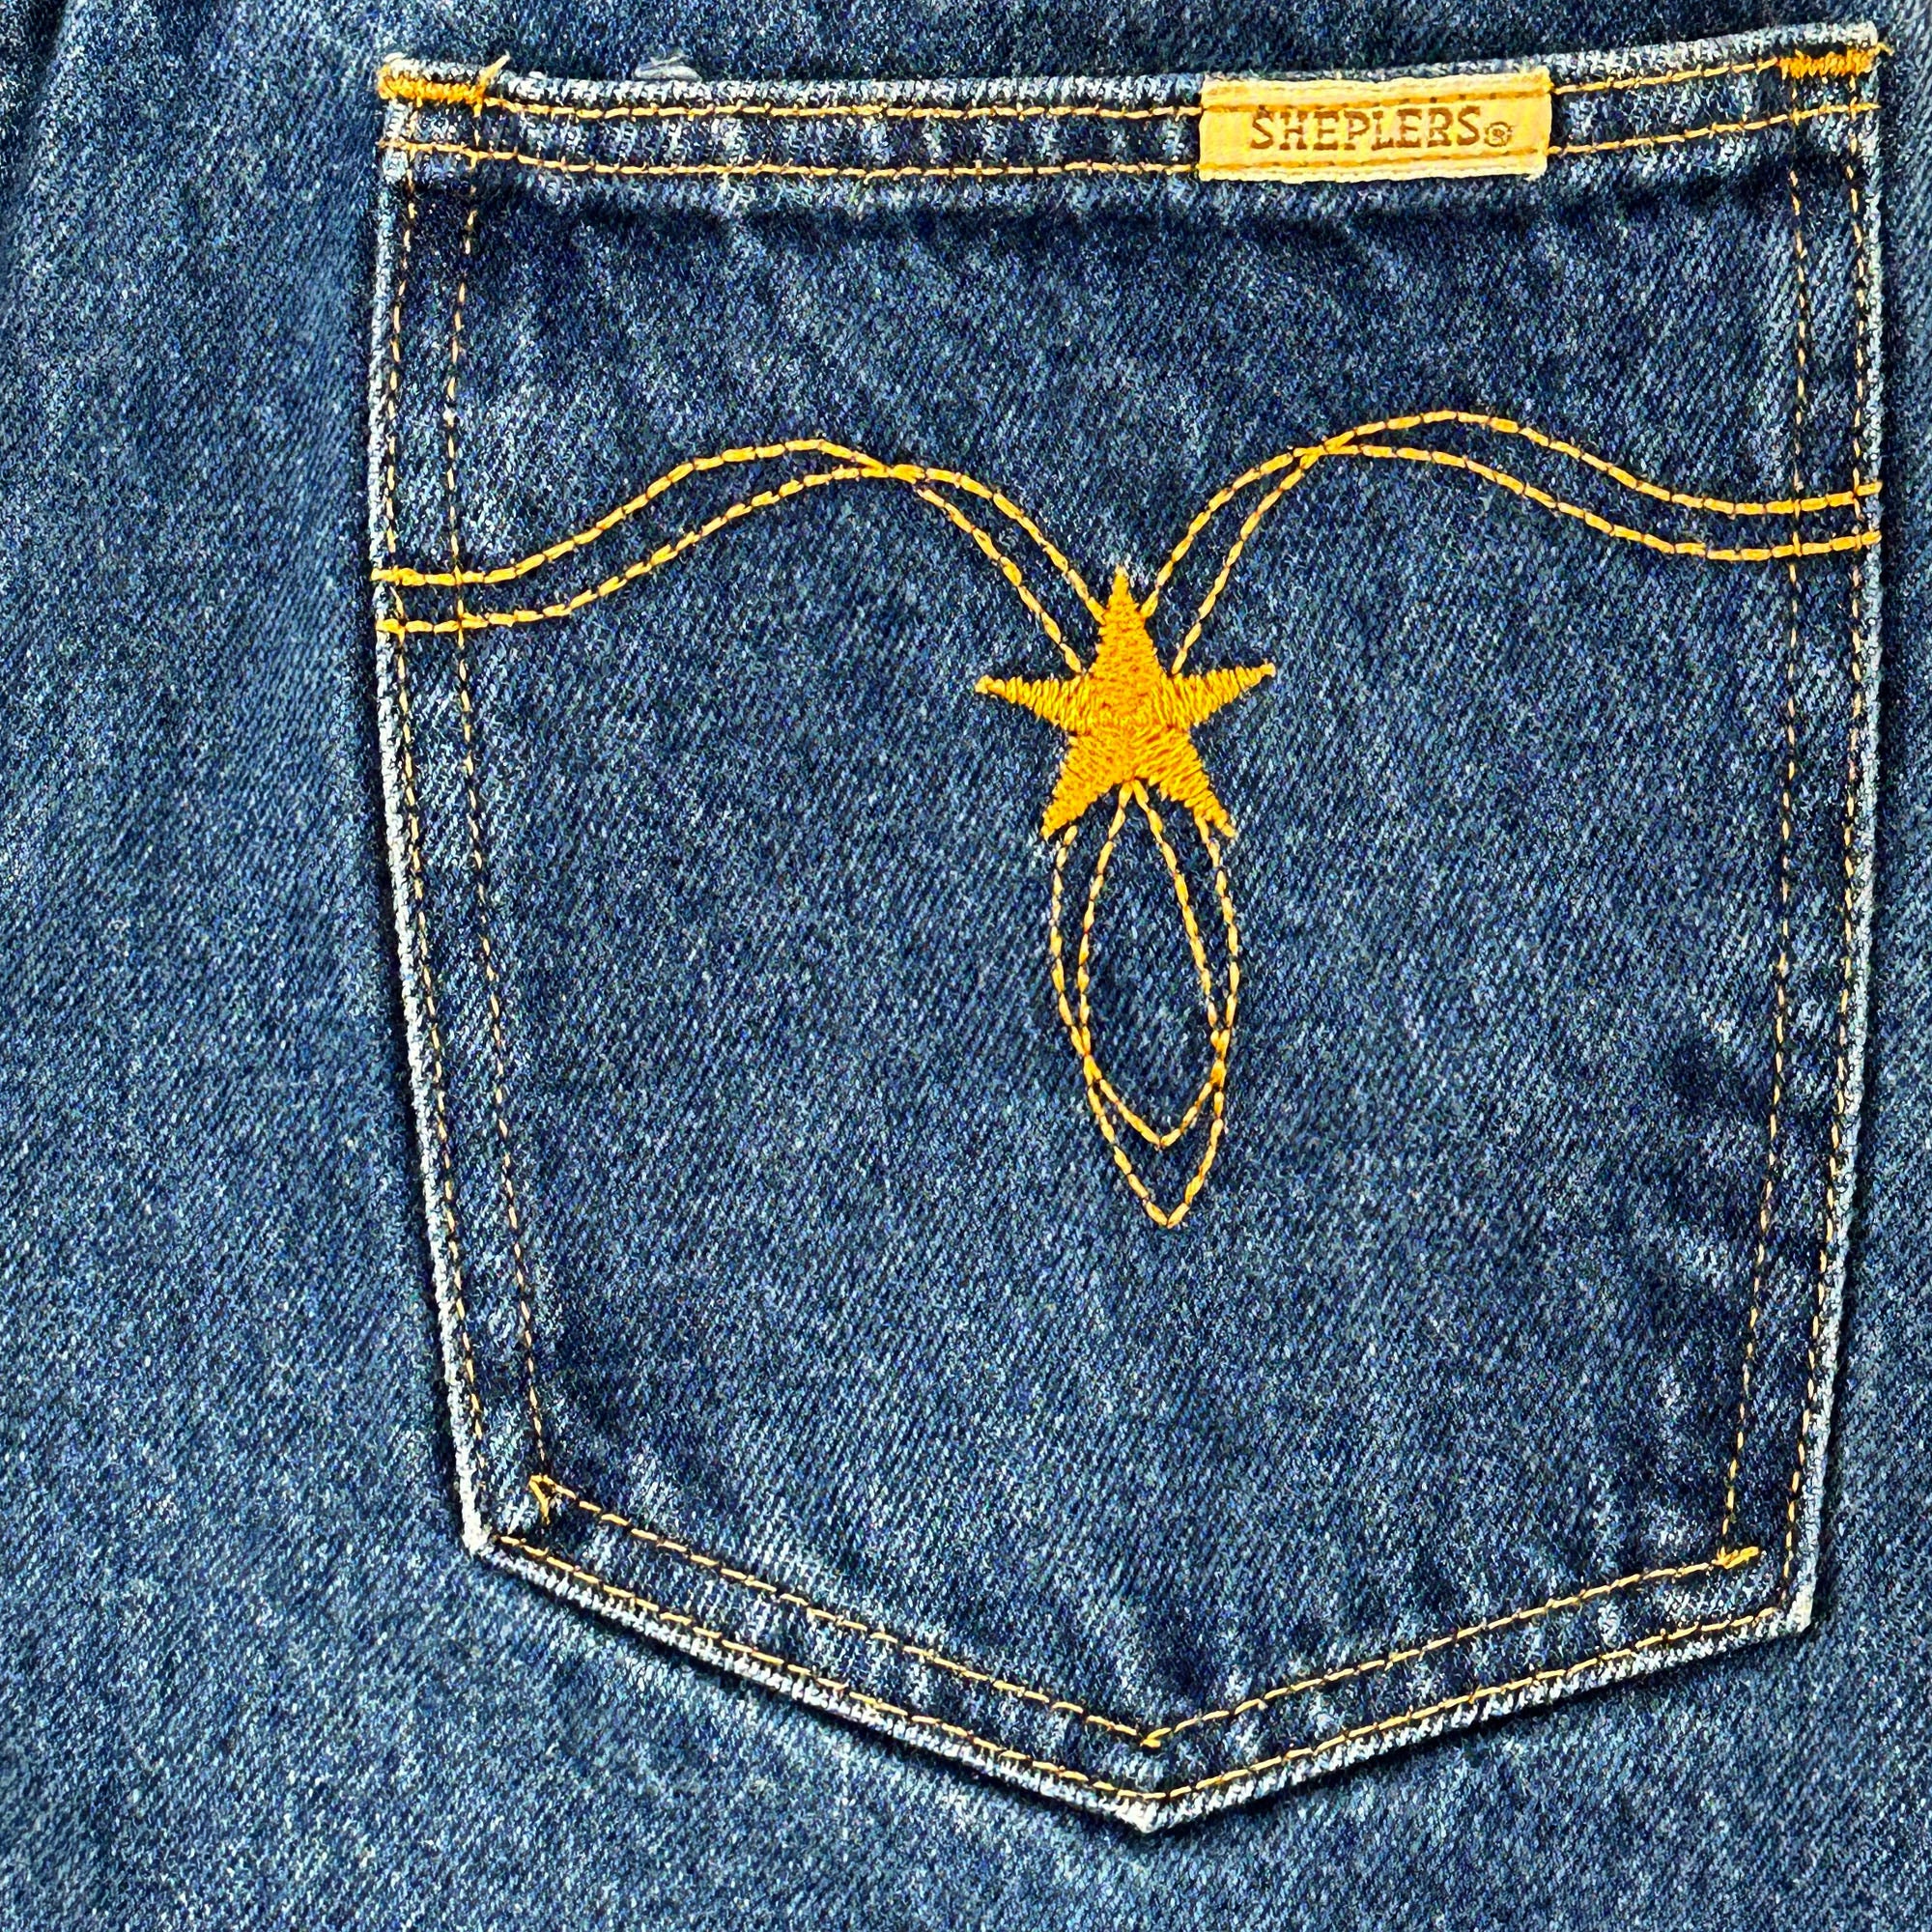 Men's Vintage 90s Shepler Western Straight Leg Jeans USA - Measures 32x32-3